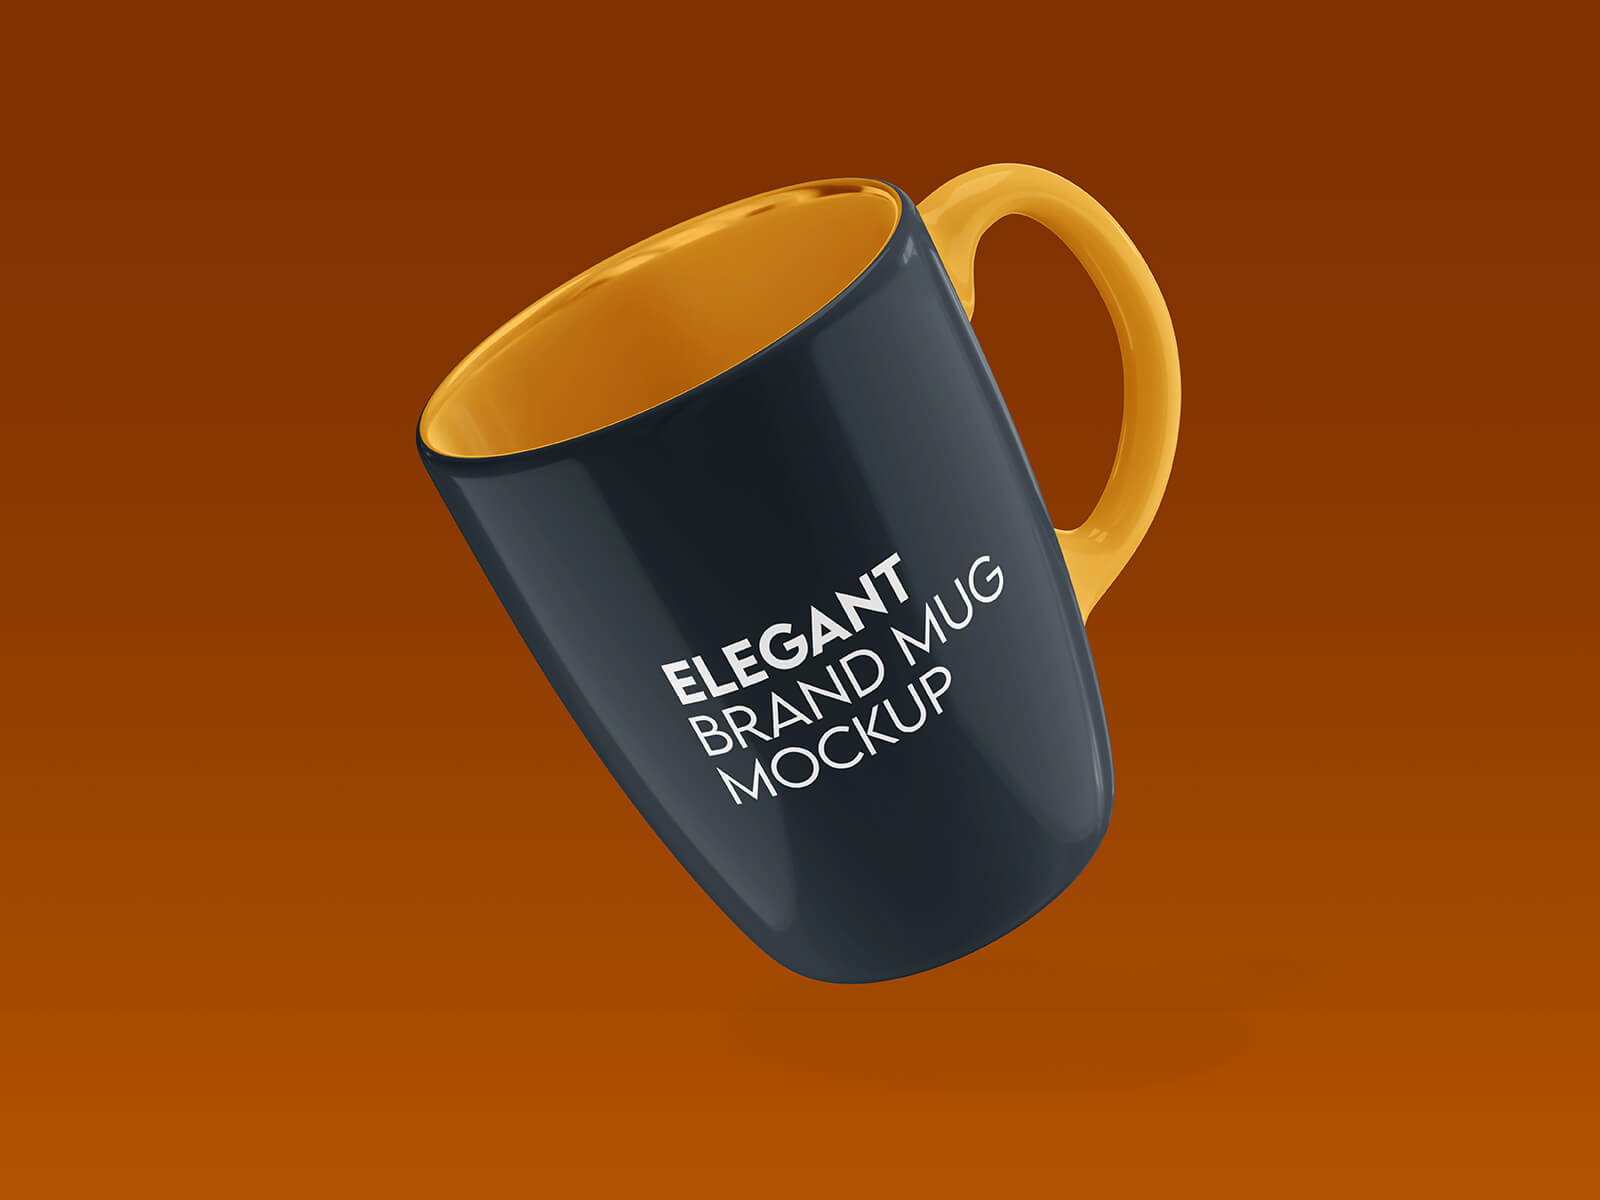 Free Branded Promotional Mug Mockup PSD Set